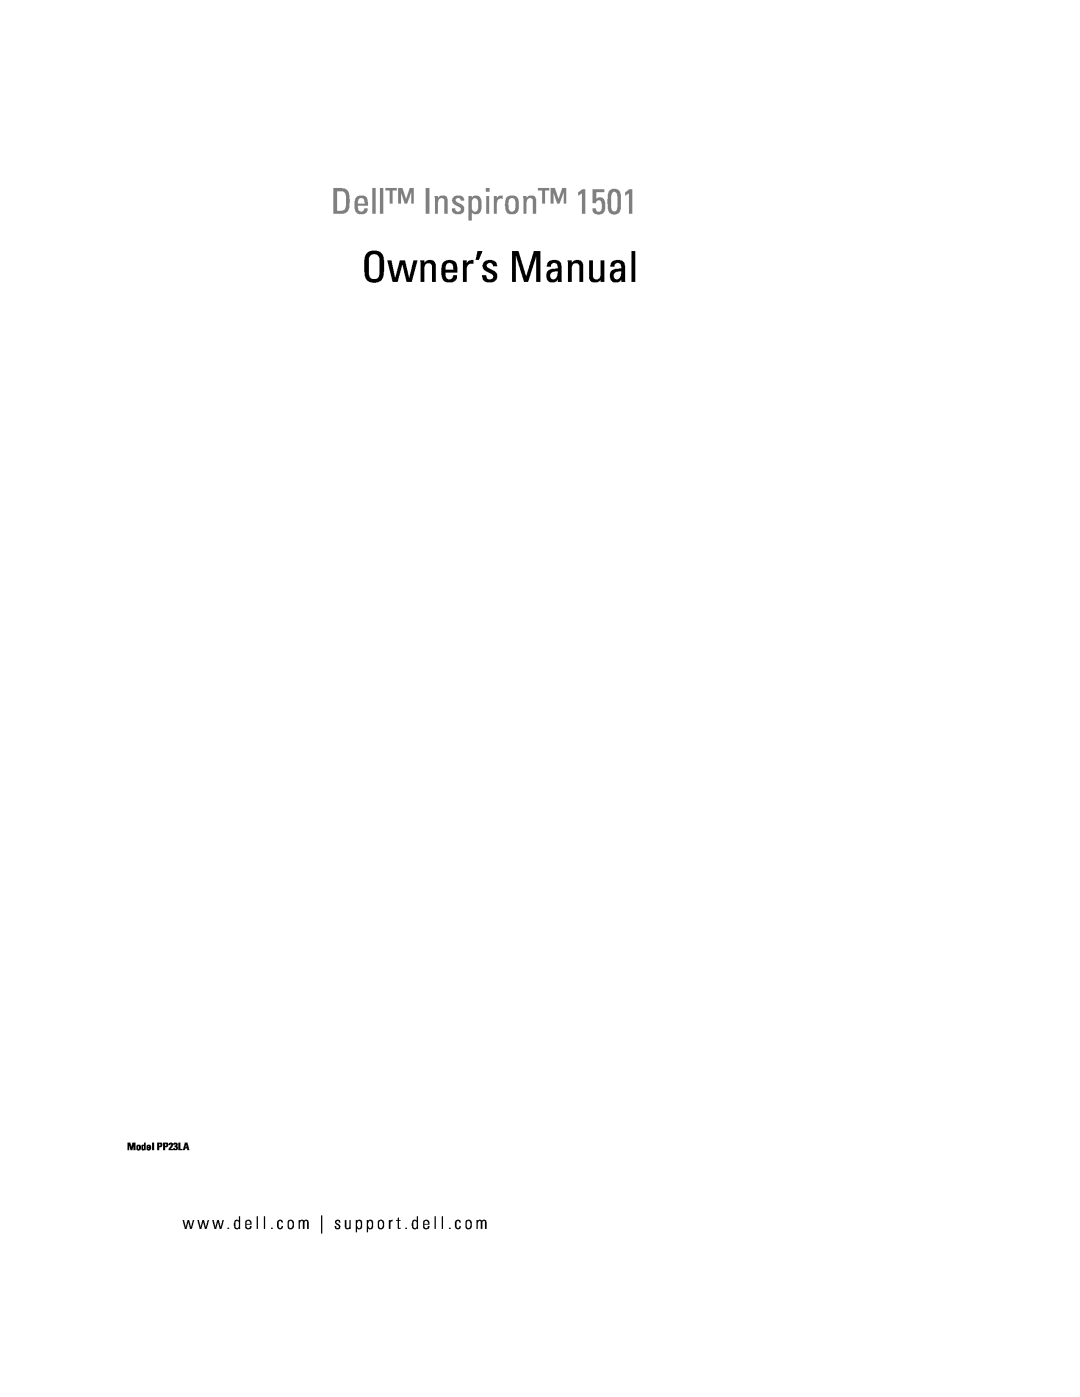 Dell 1501 owner manual Owner’s Manual, Dell Inspiron, Model PP23LA 